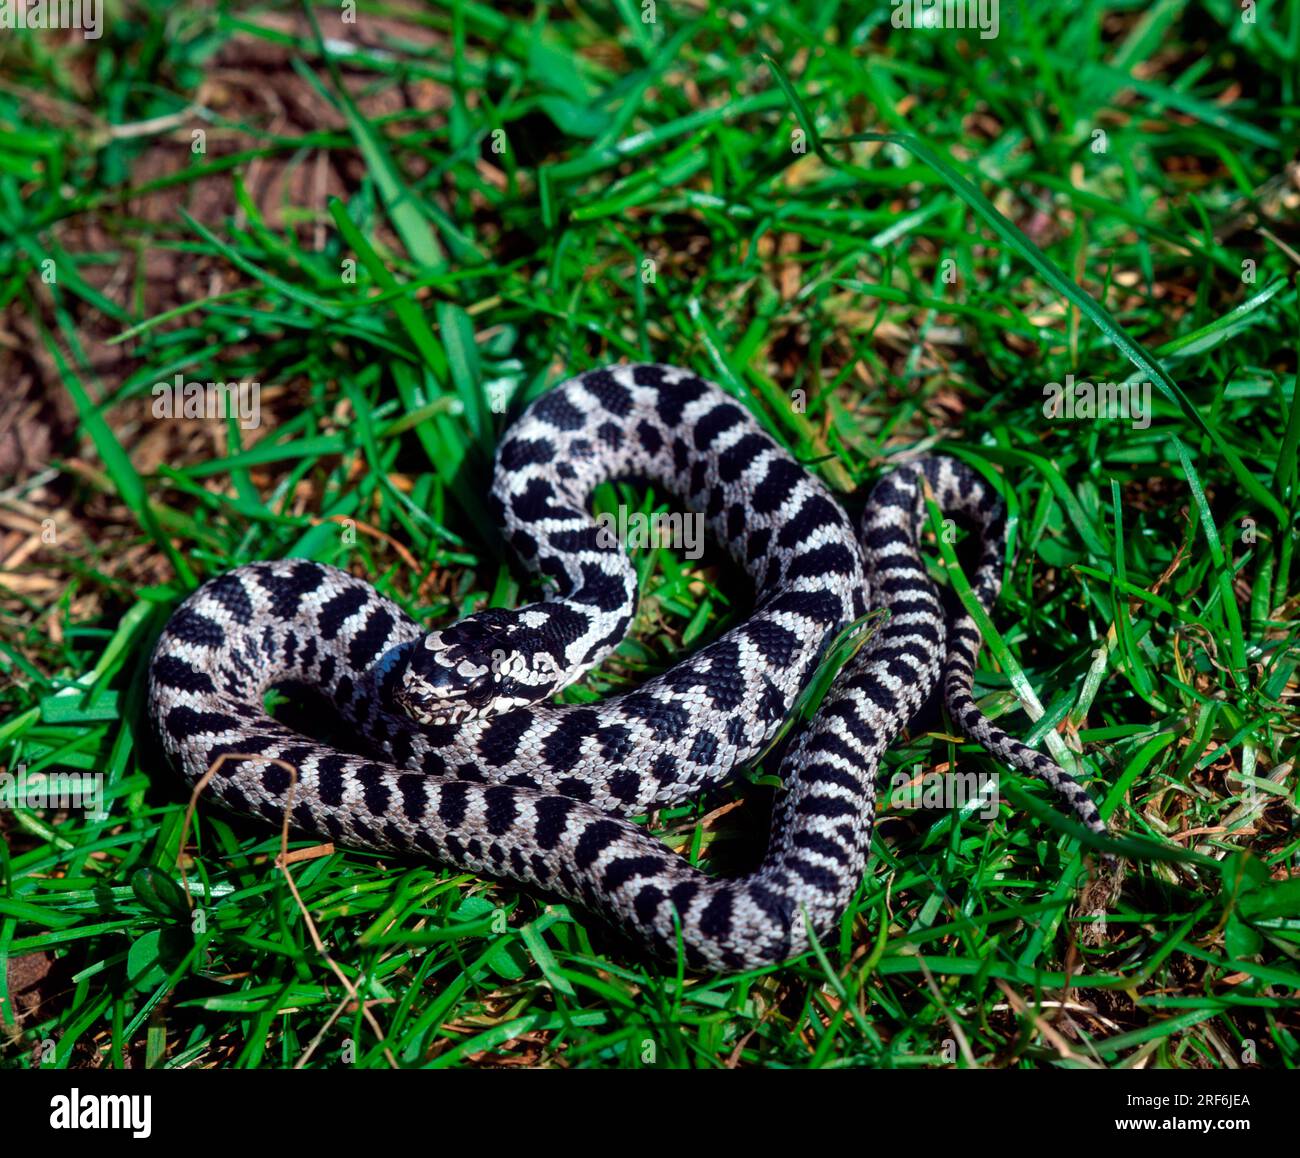 Four-lined Snake (Elaphe quatuorlineata) Stock Photo